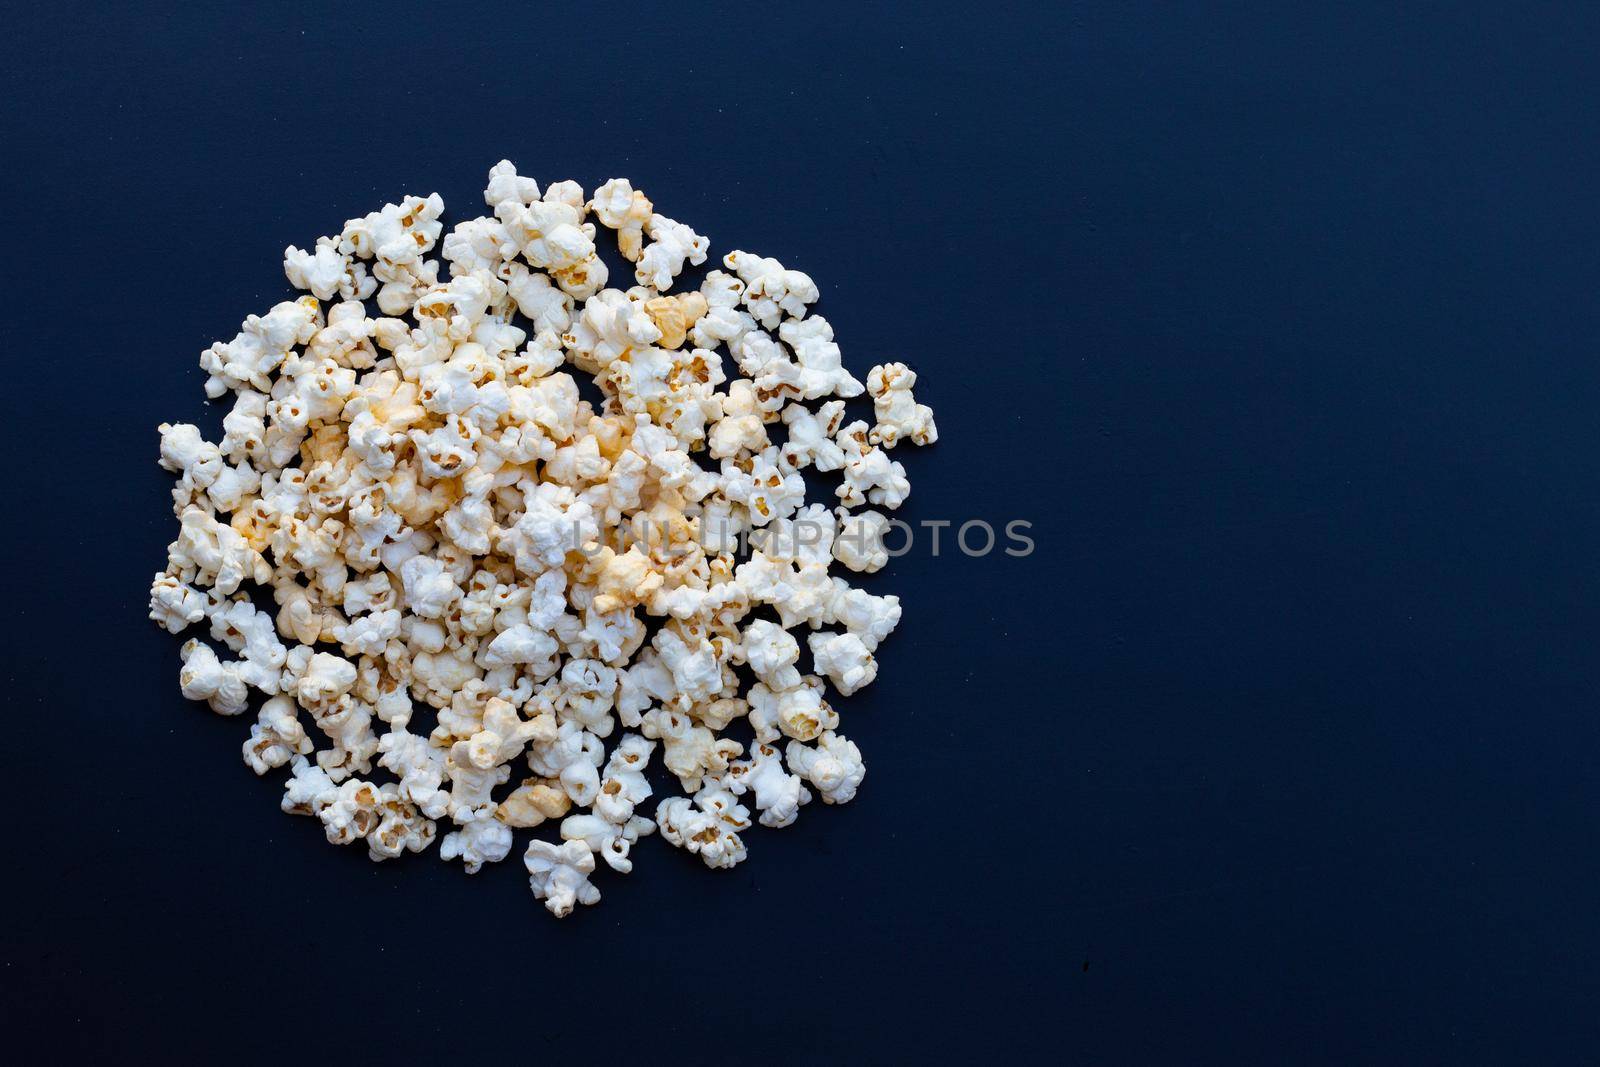 Popcorn on dark background. Copy space by Bowonpat